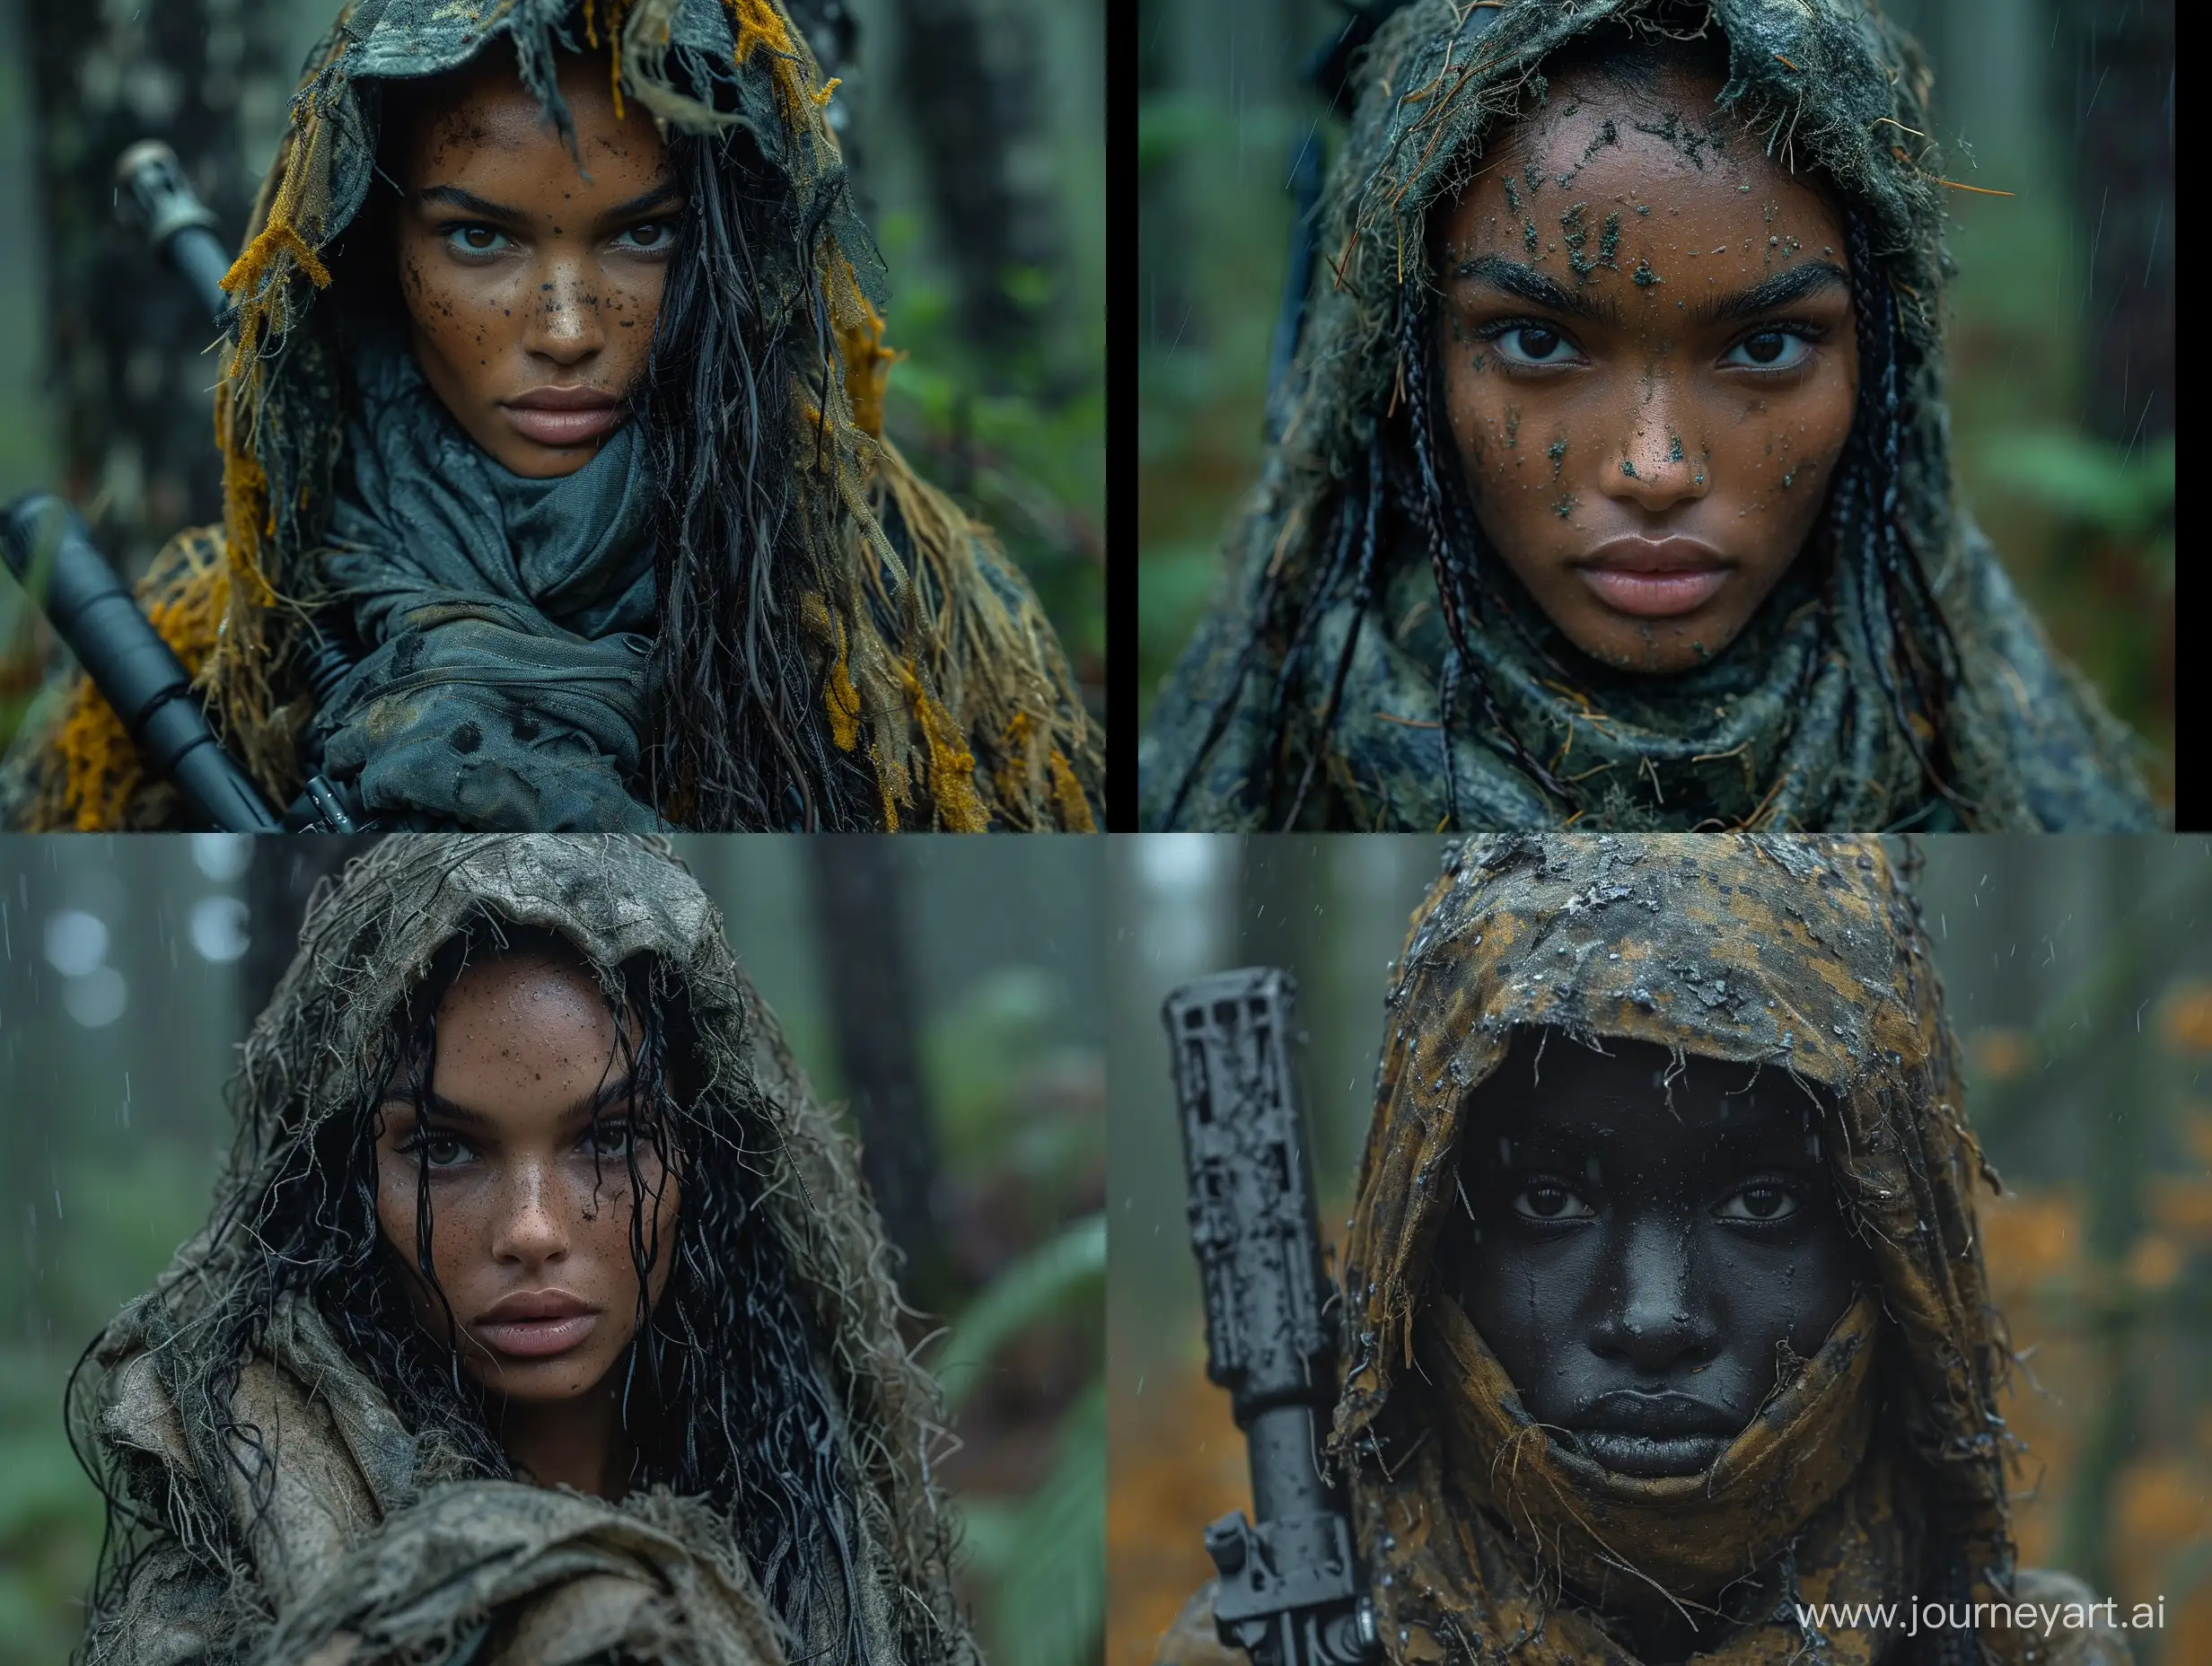 Stealthy-Mulatto-Female-Mercenary-in-Ghillie-Suit-Amidst-Eerie-Dark-Forest